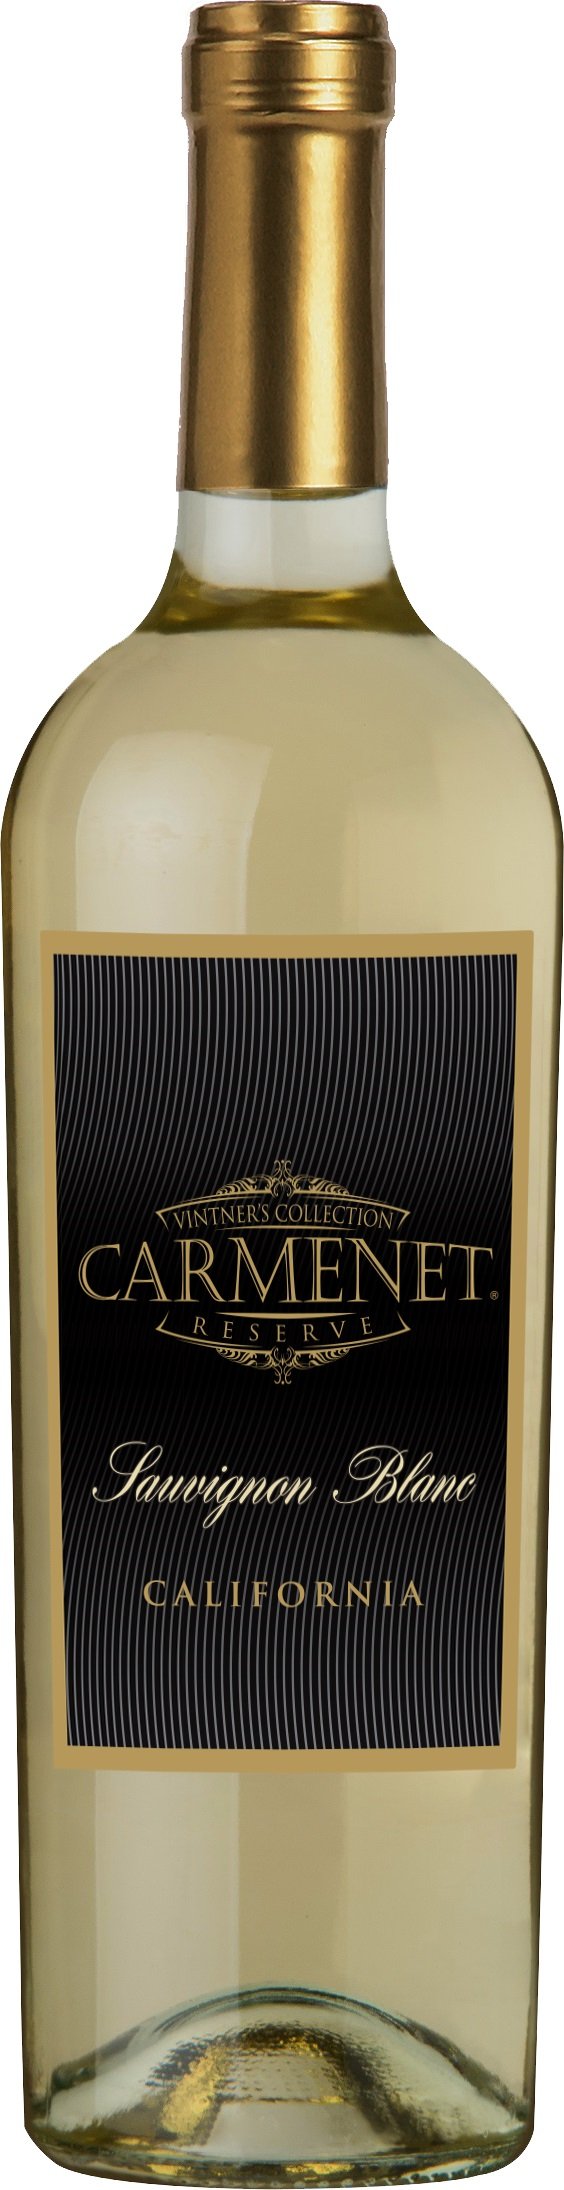 Carmenet Sauvignon Blanc 2017